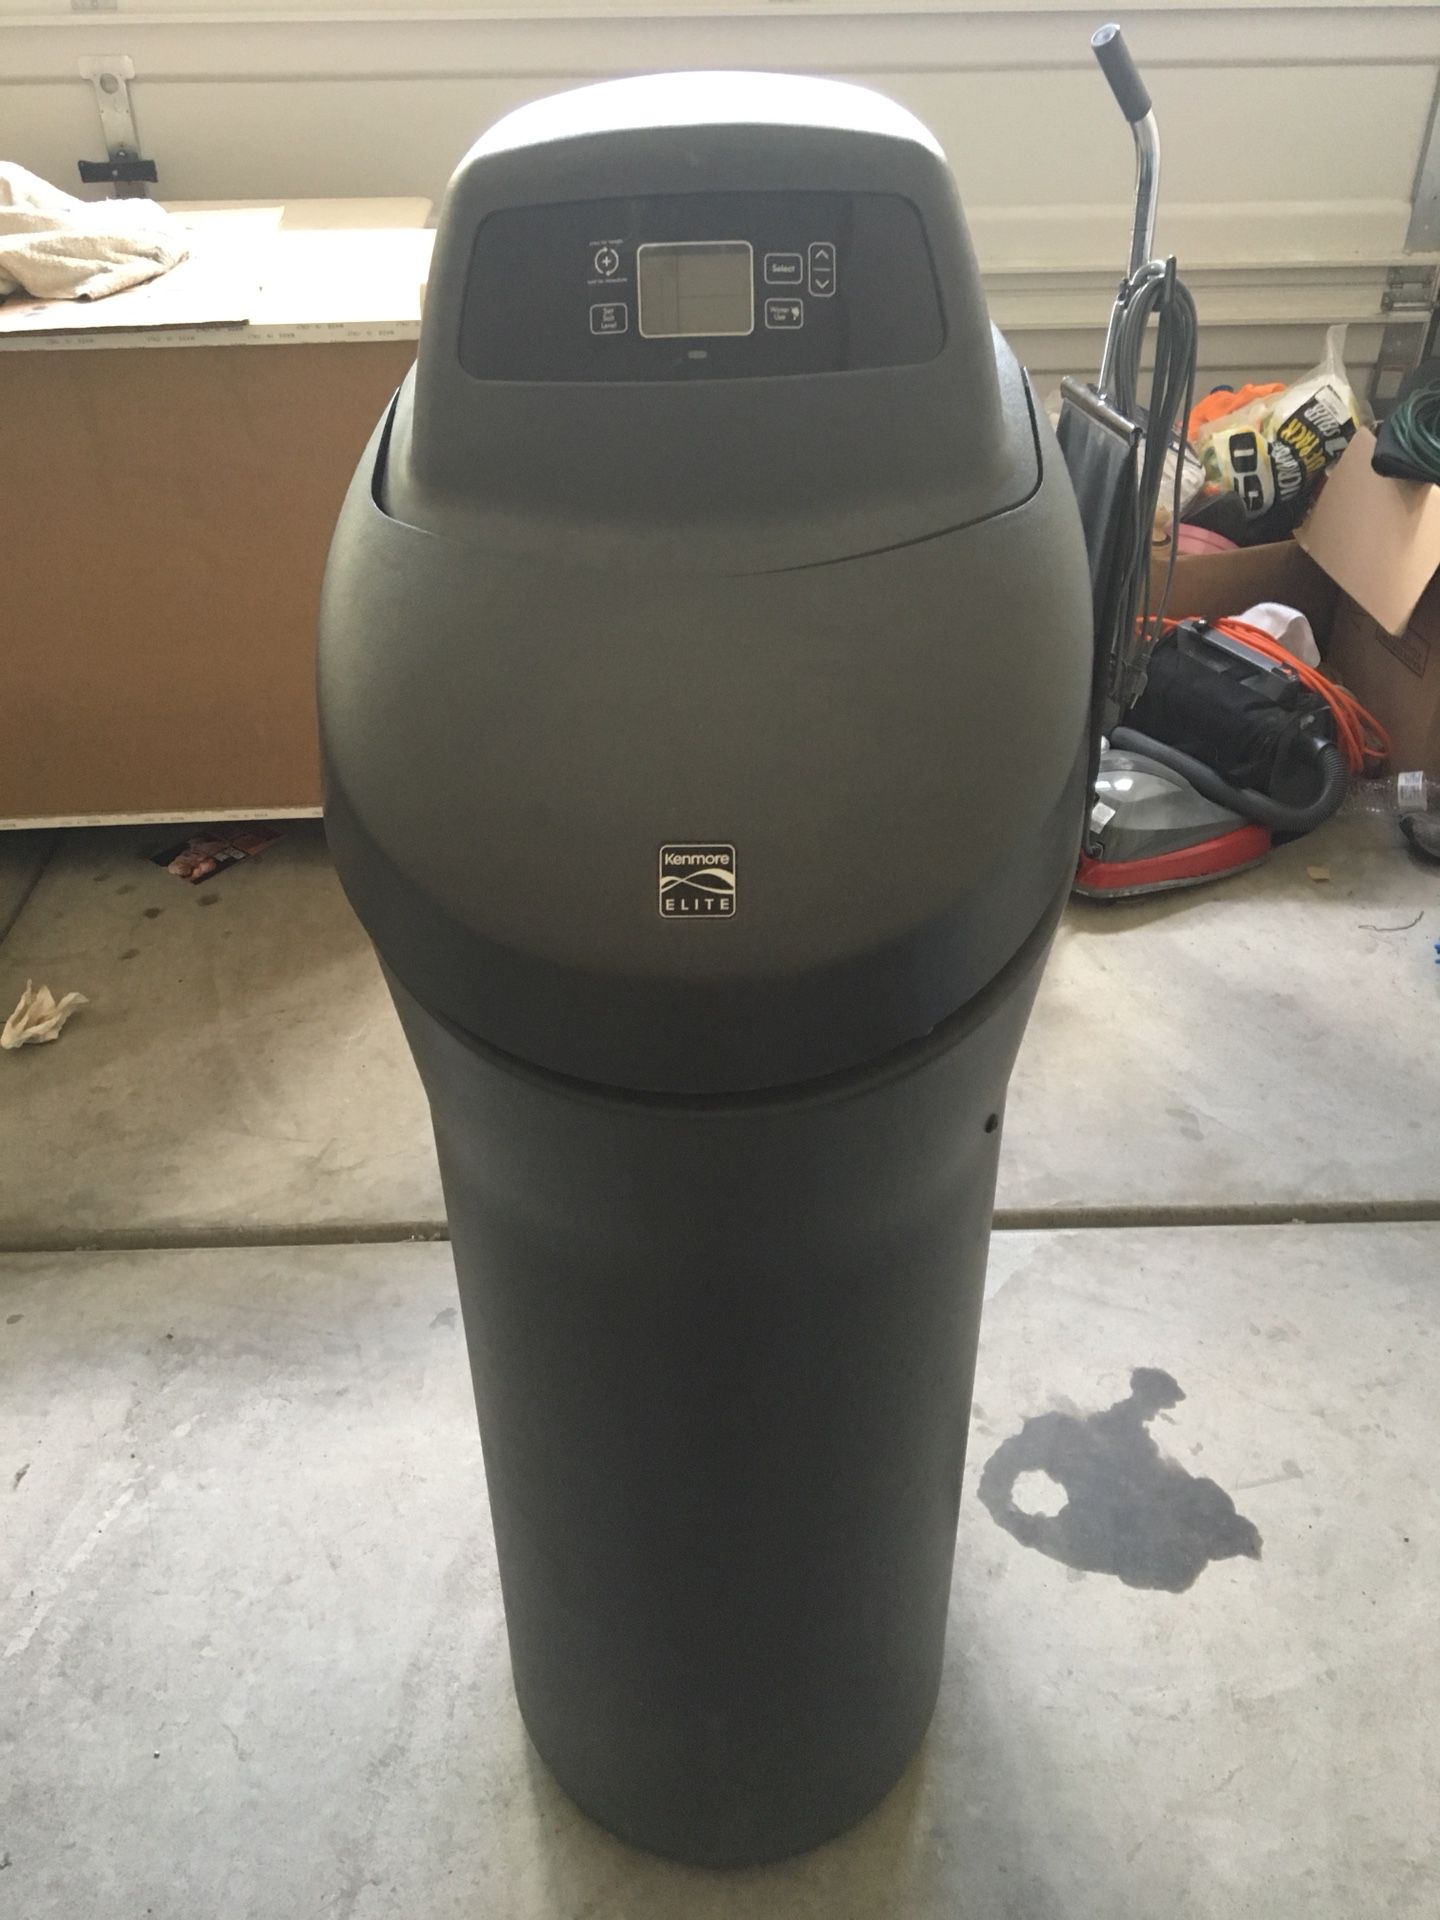 Kenmore Elite water filter, softener combo unit